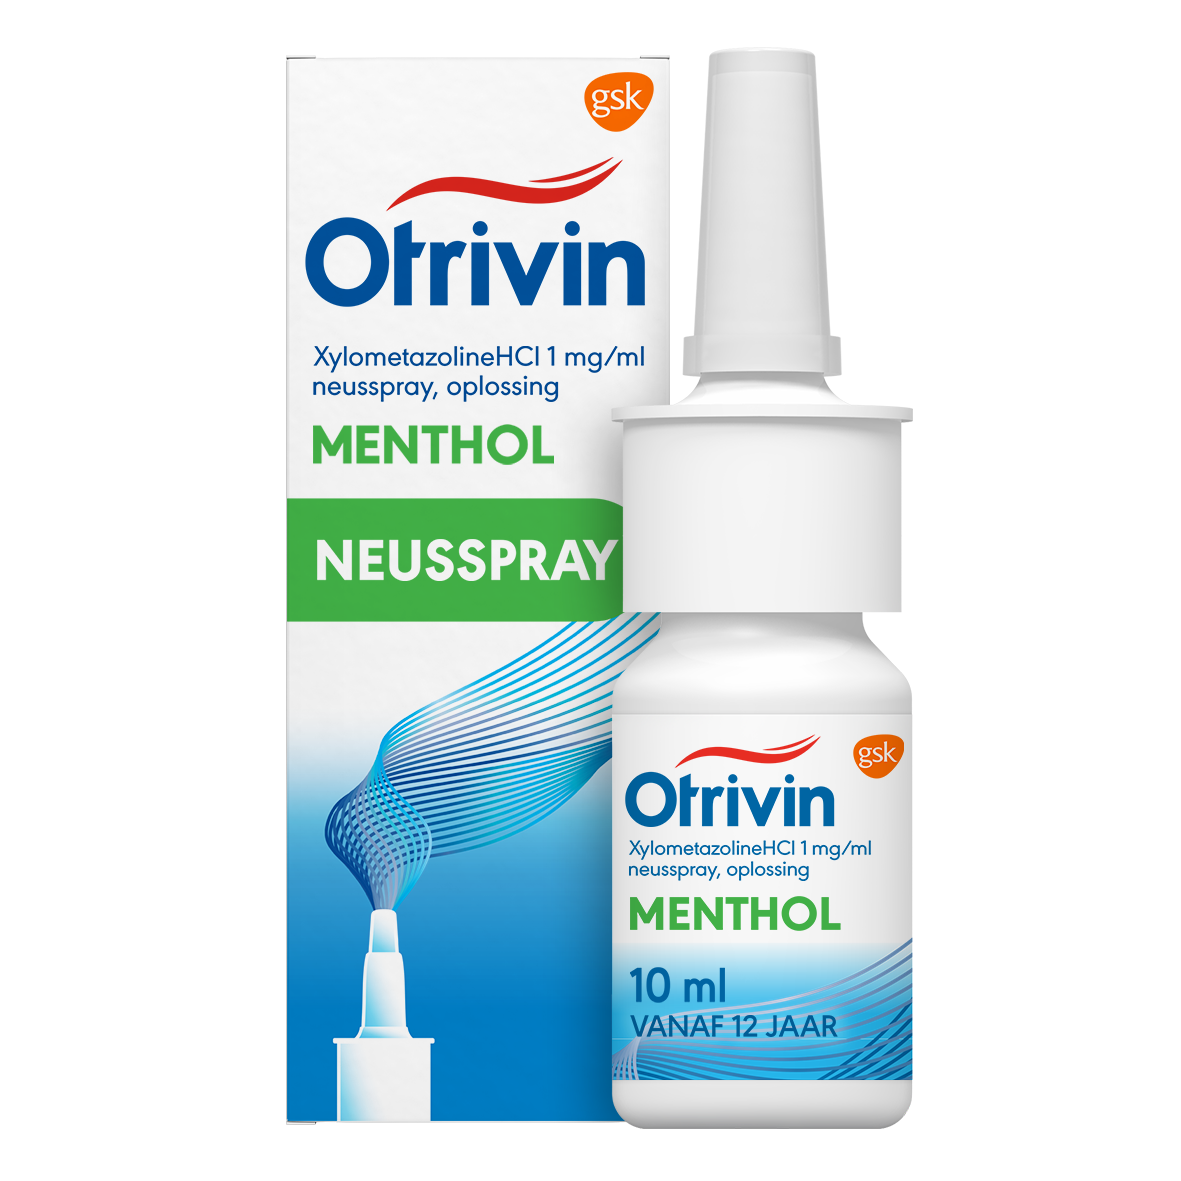 Image of Otrivin Menthol Xylometazoline HCI 1 mg/ml Neusspray bij een verstopte neus